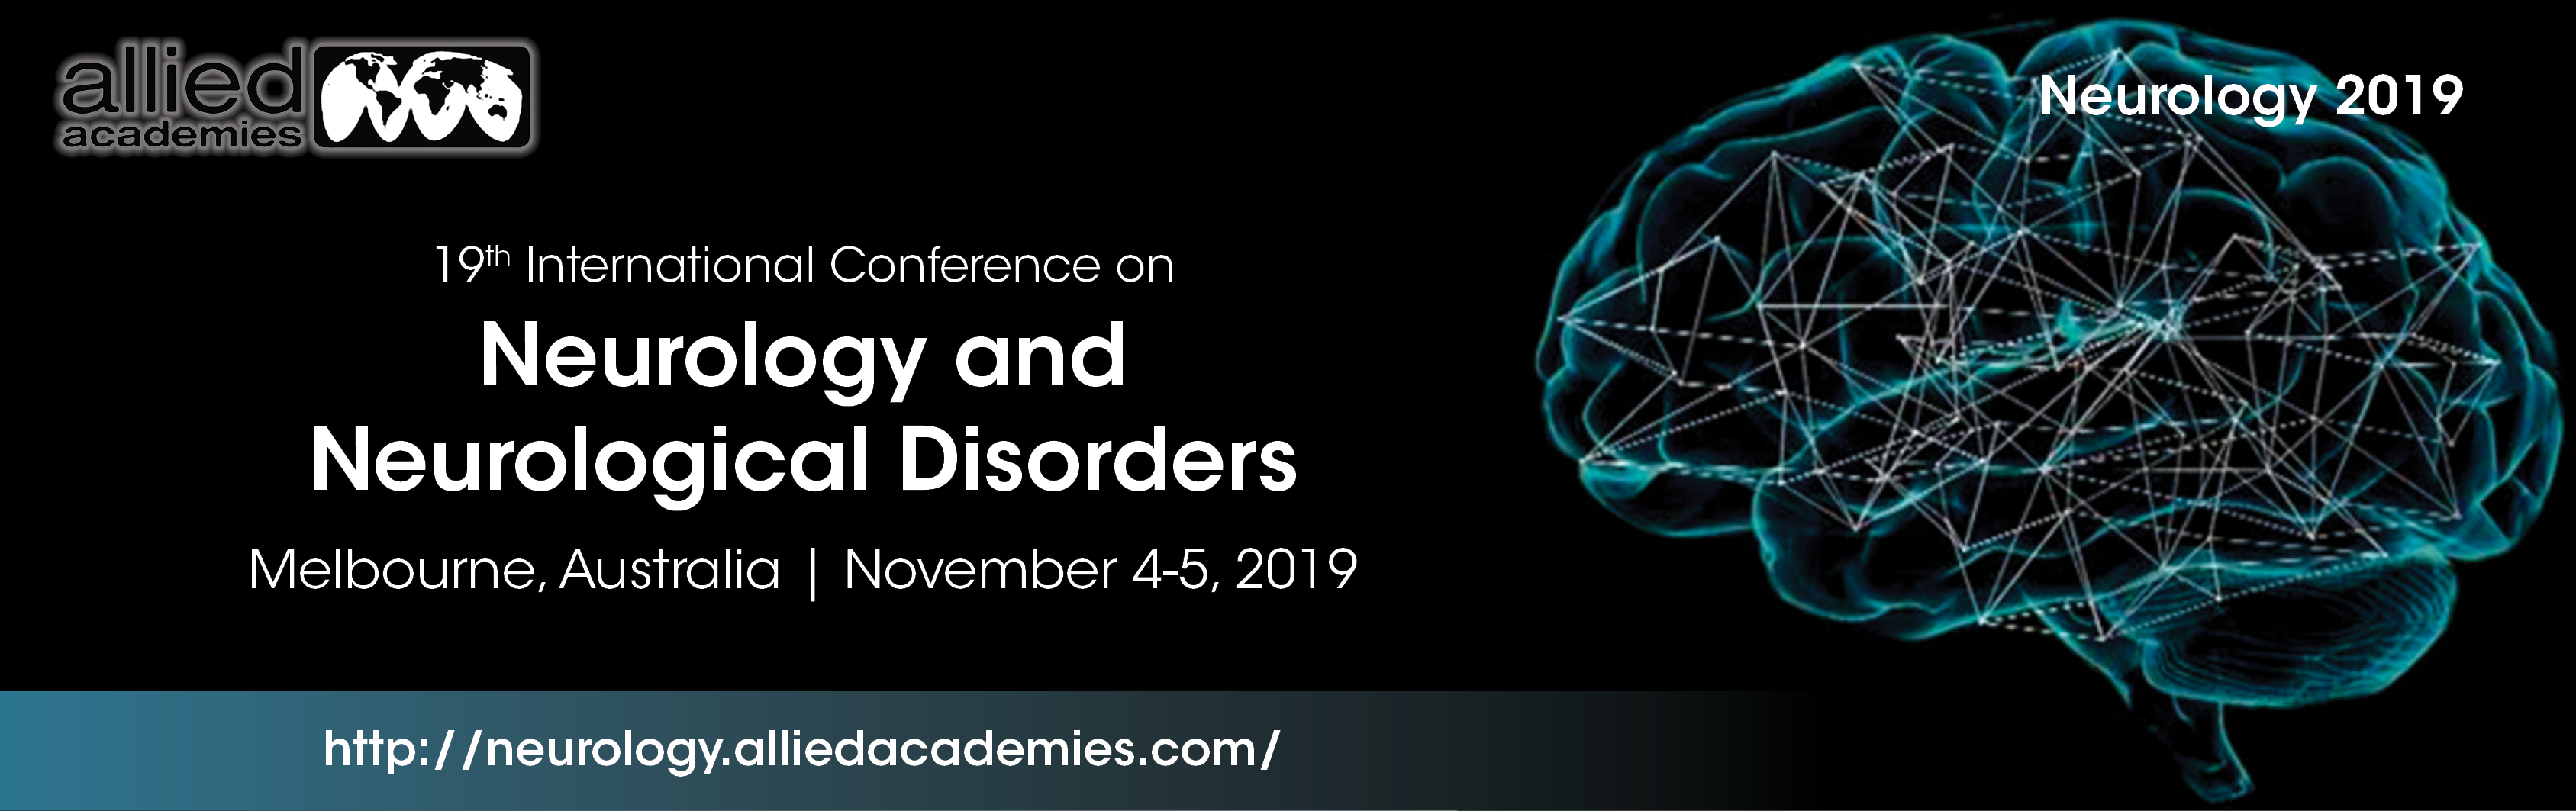 Neurology Congress Brain Conferences Depression Events Stroke